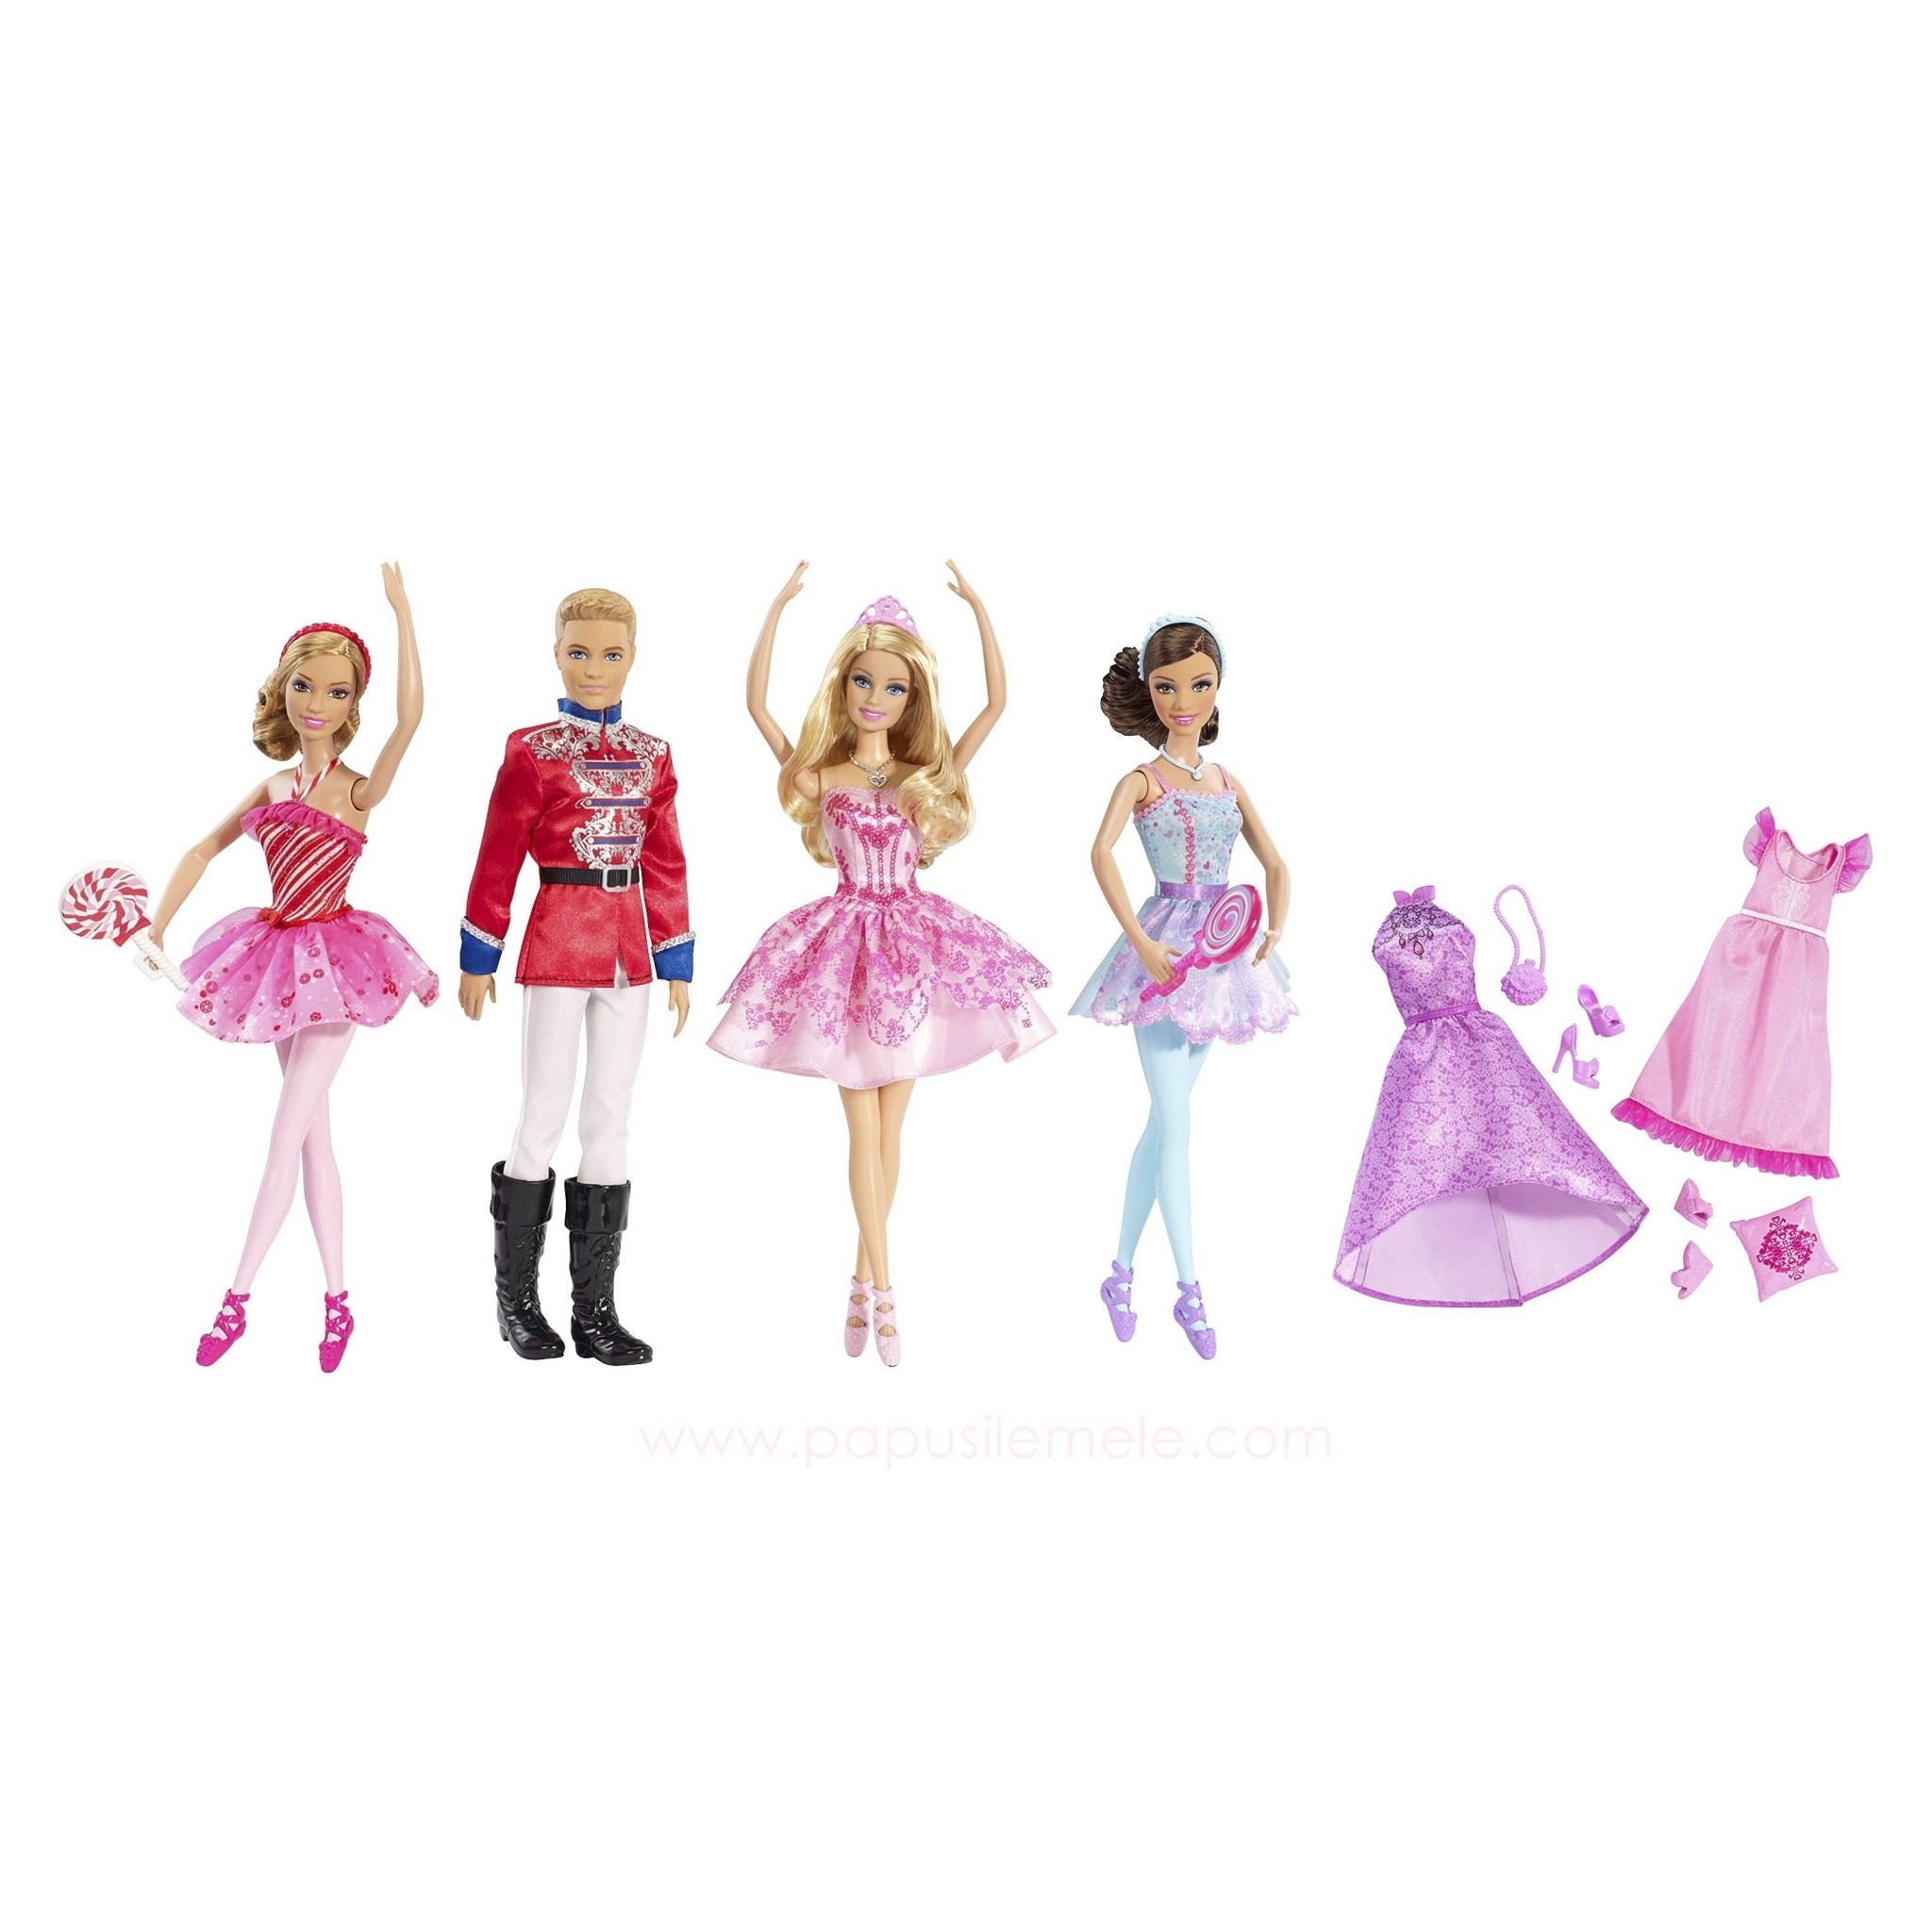 2048x2048 barbie wallpaper desktop backgrounds free